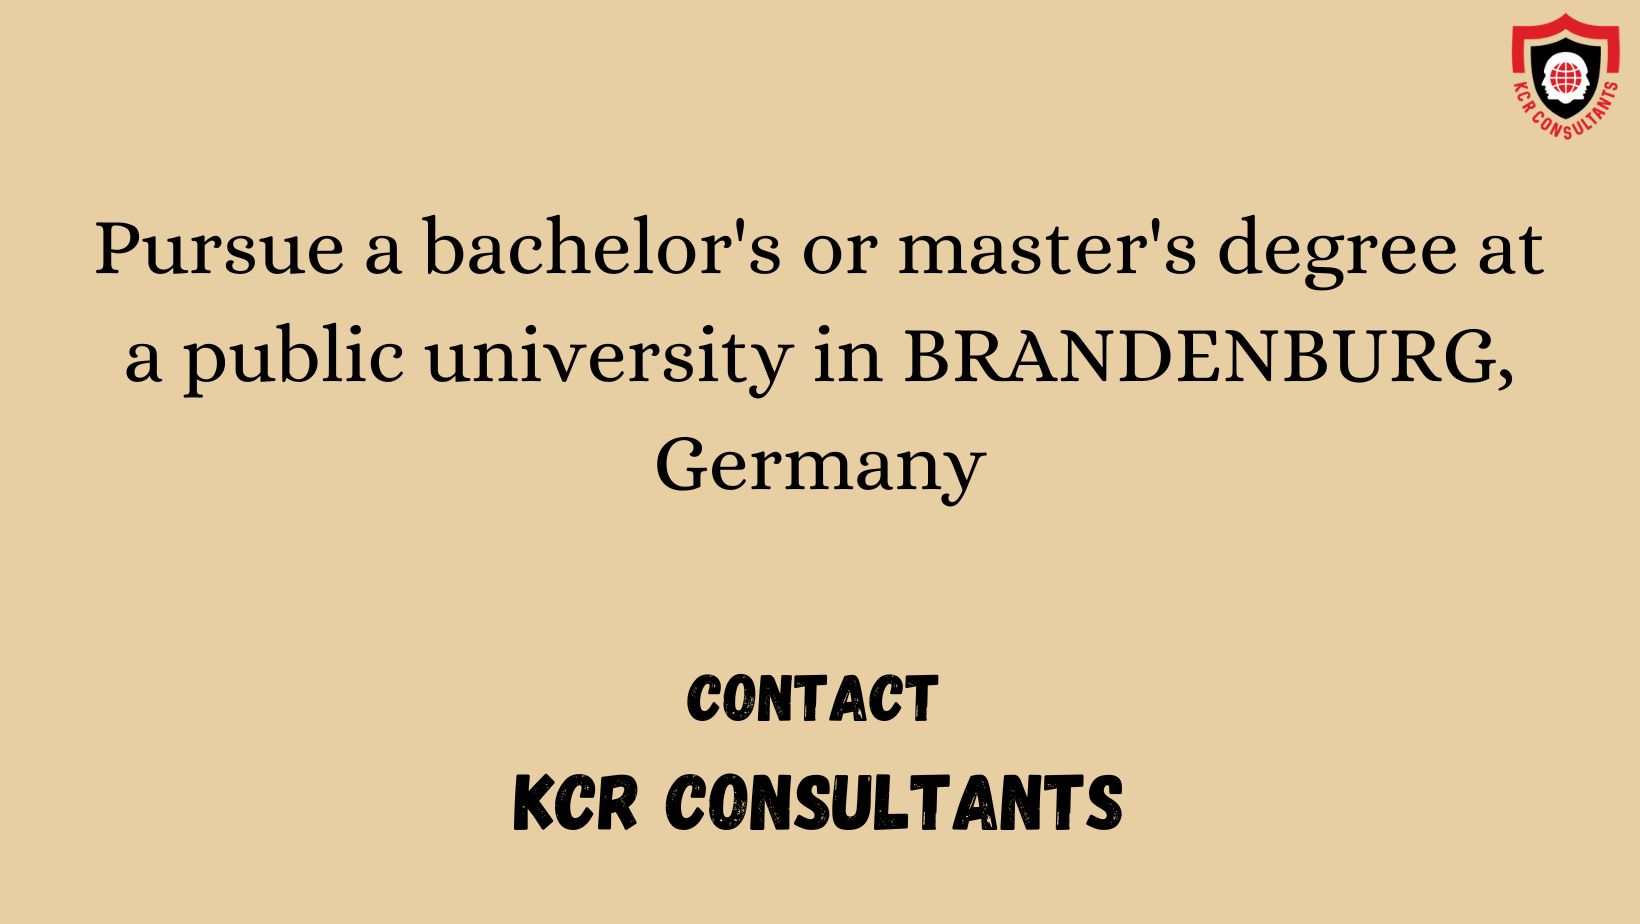 BRANDENBURG - KCR CONSULTANTS - Contactus